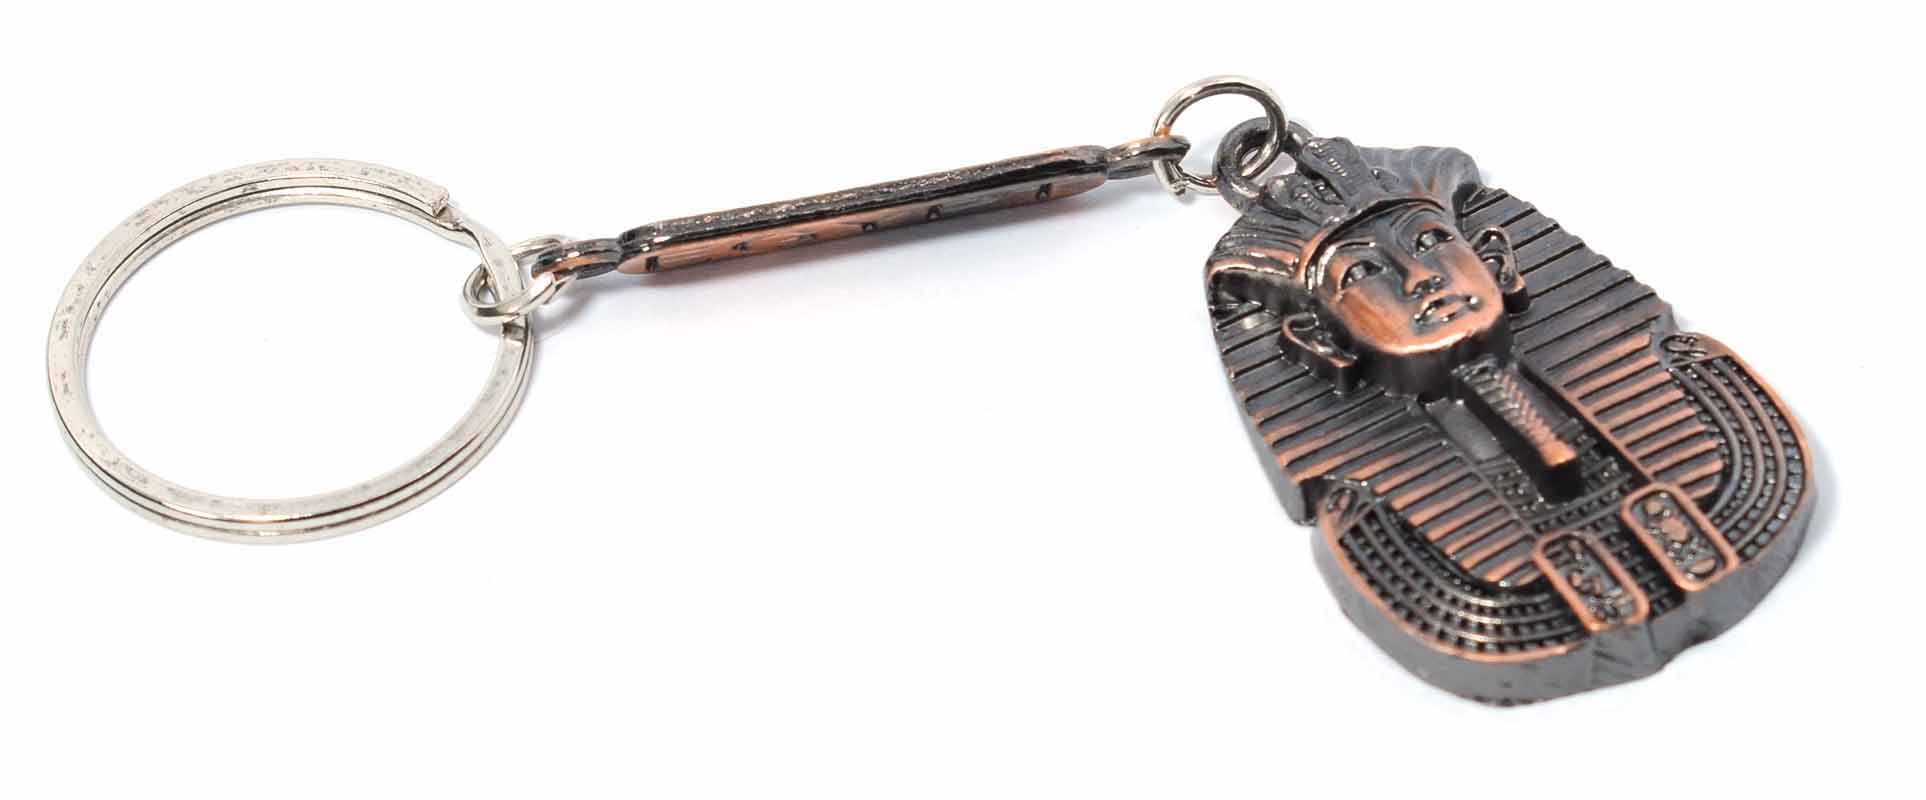 immatgar pharaonic Egyptian king tutankhamun face keychain Egyptian souvenirs gifts - Inspired Gift from Egypt ( Burnt Red )